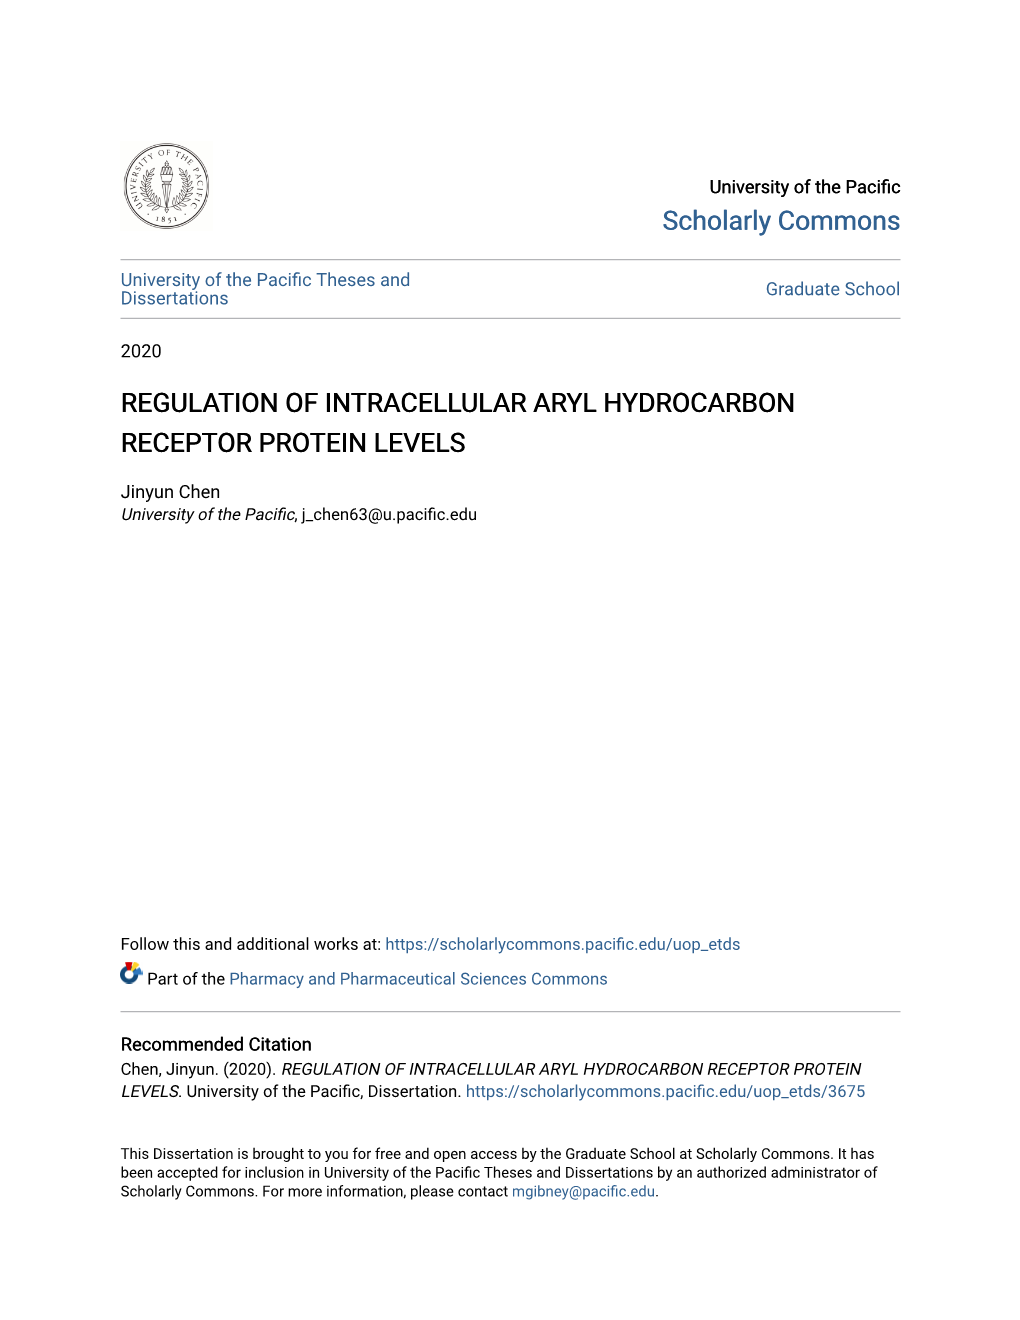 Regulation of Intracellular Aryl Hydrocarbon Receptor Protein Levels